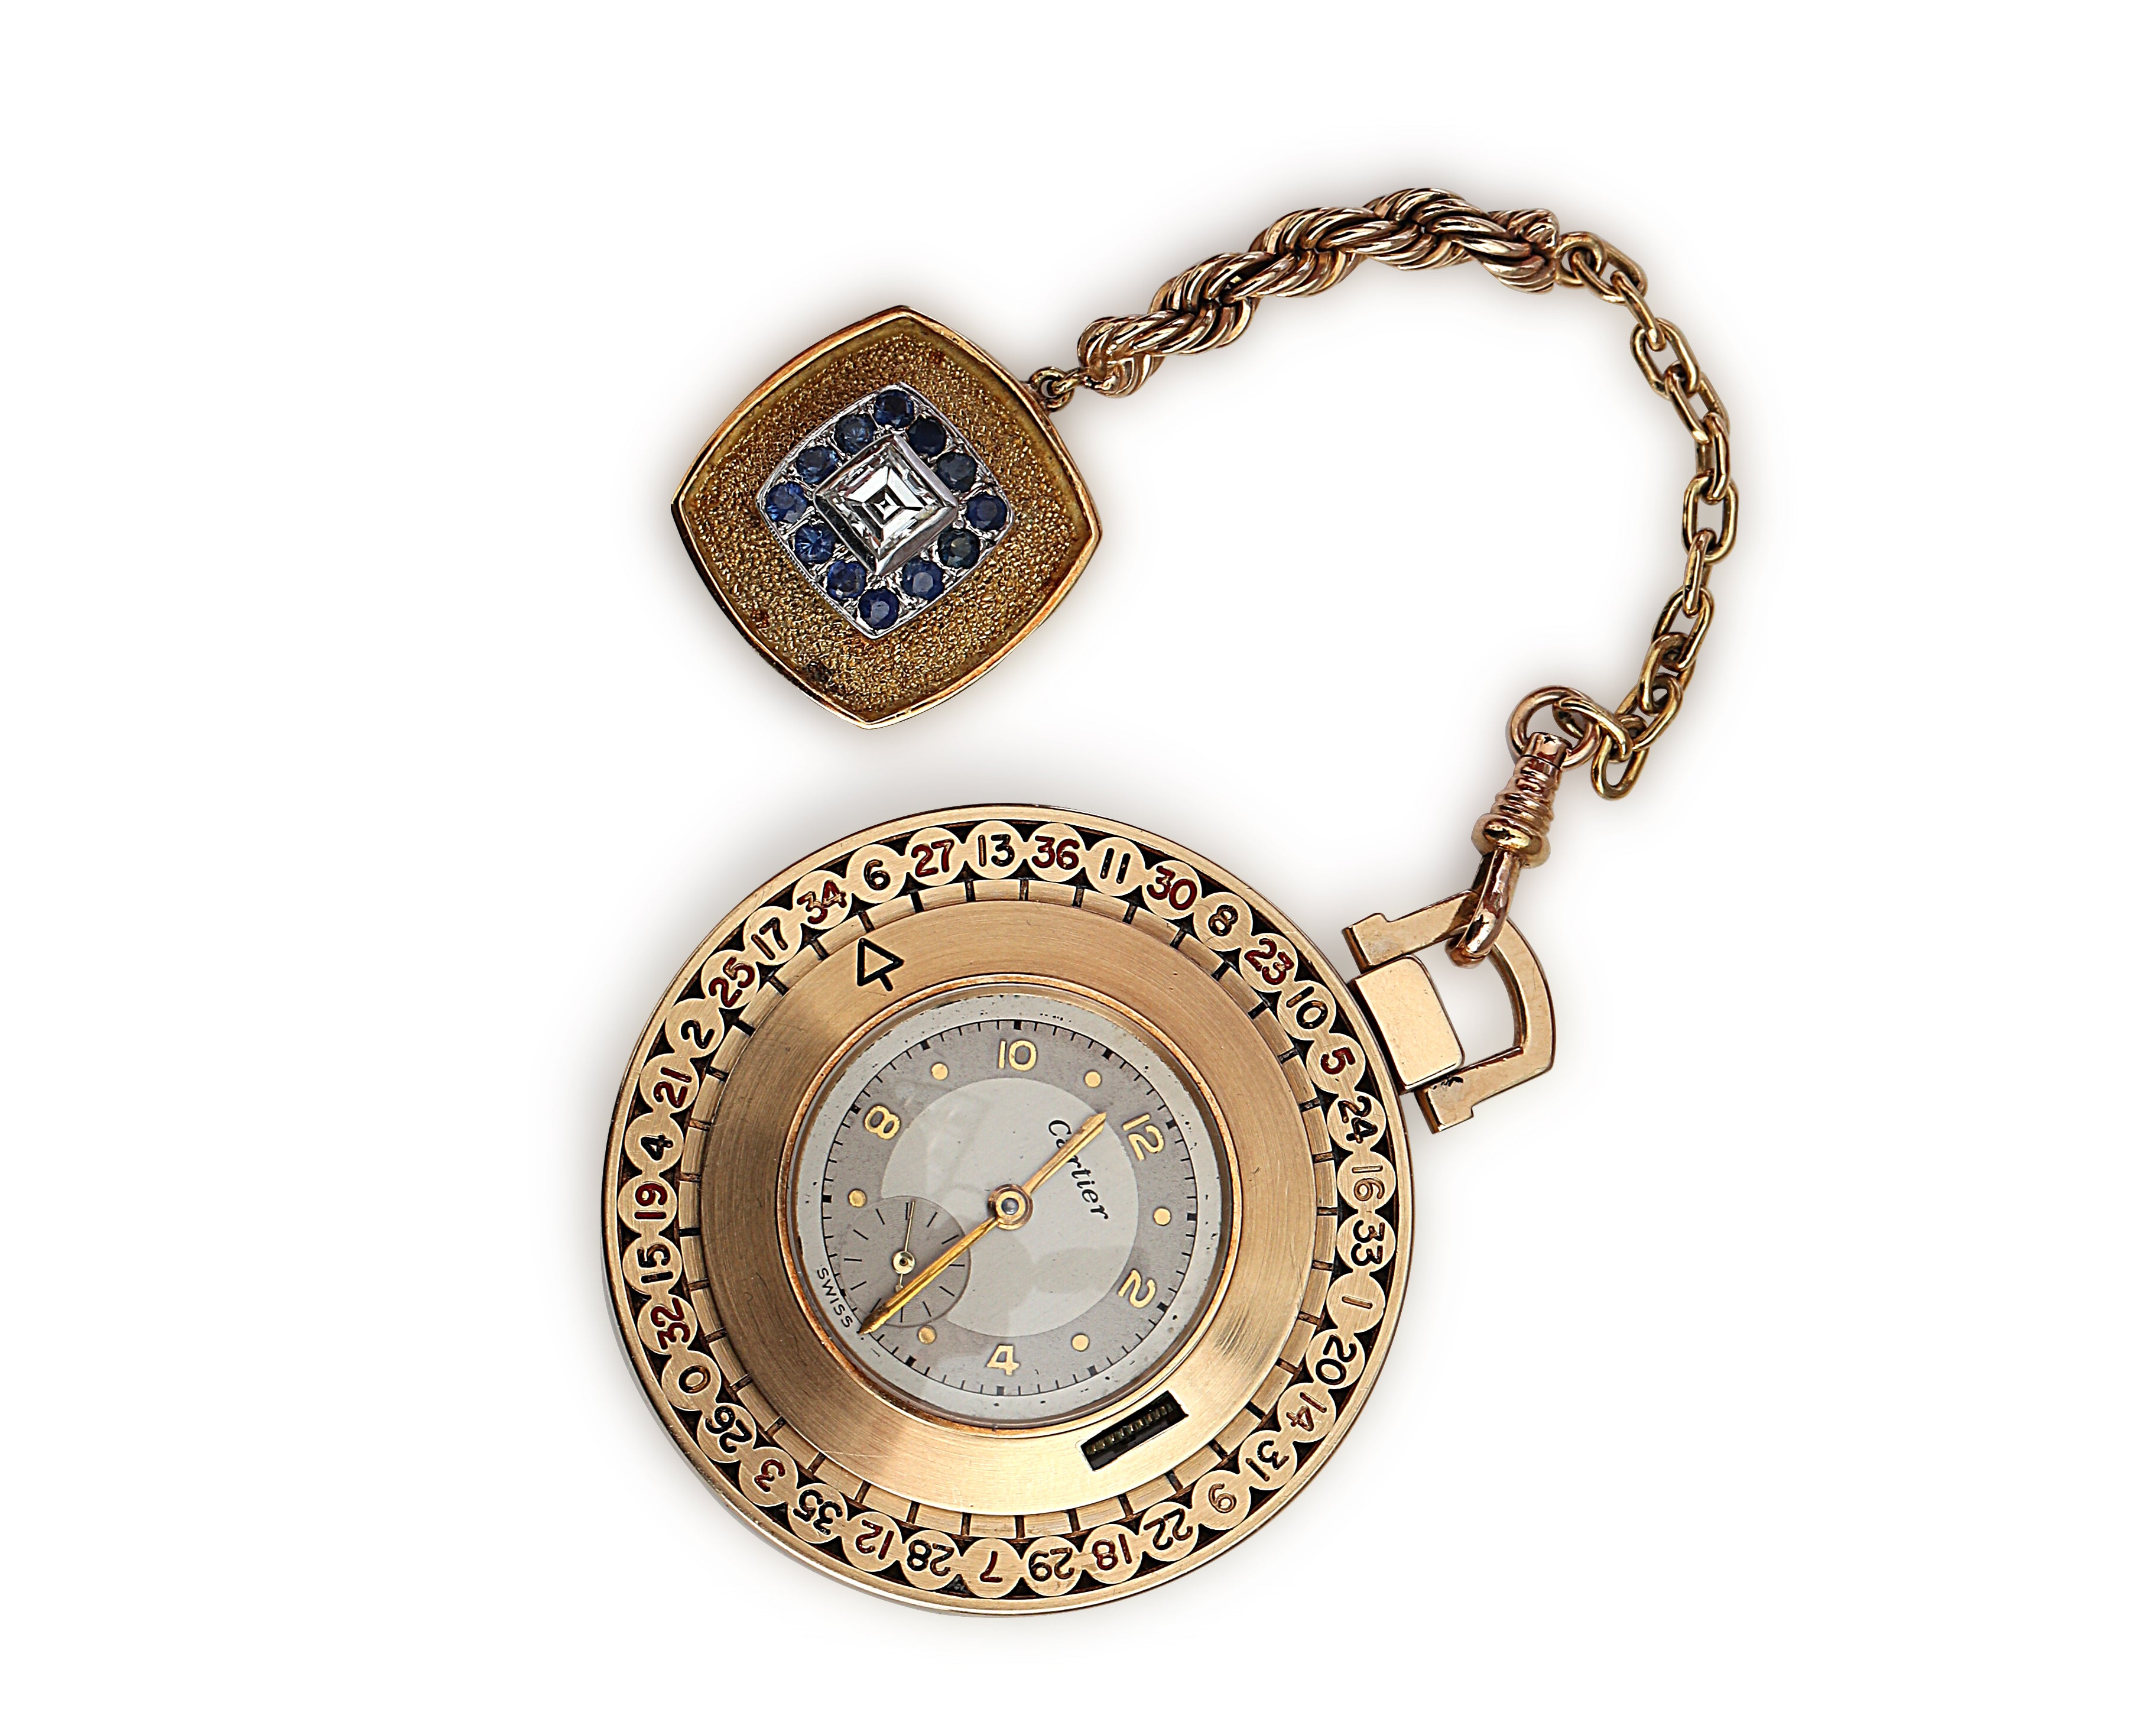 1950s Cartier Roulette pocket watch 